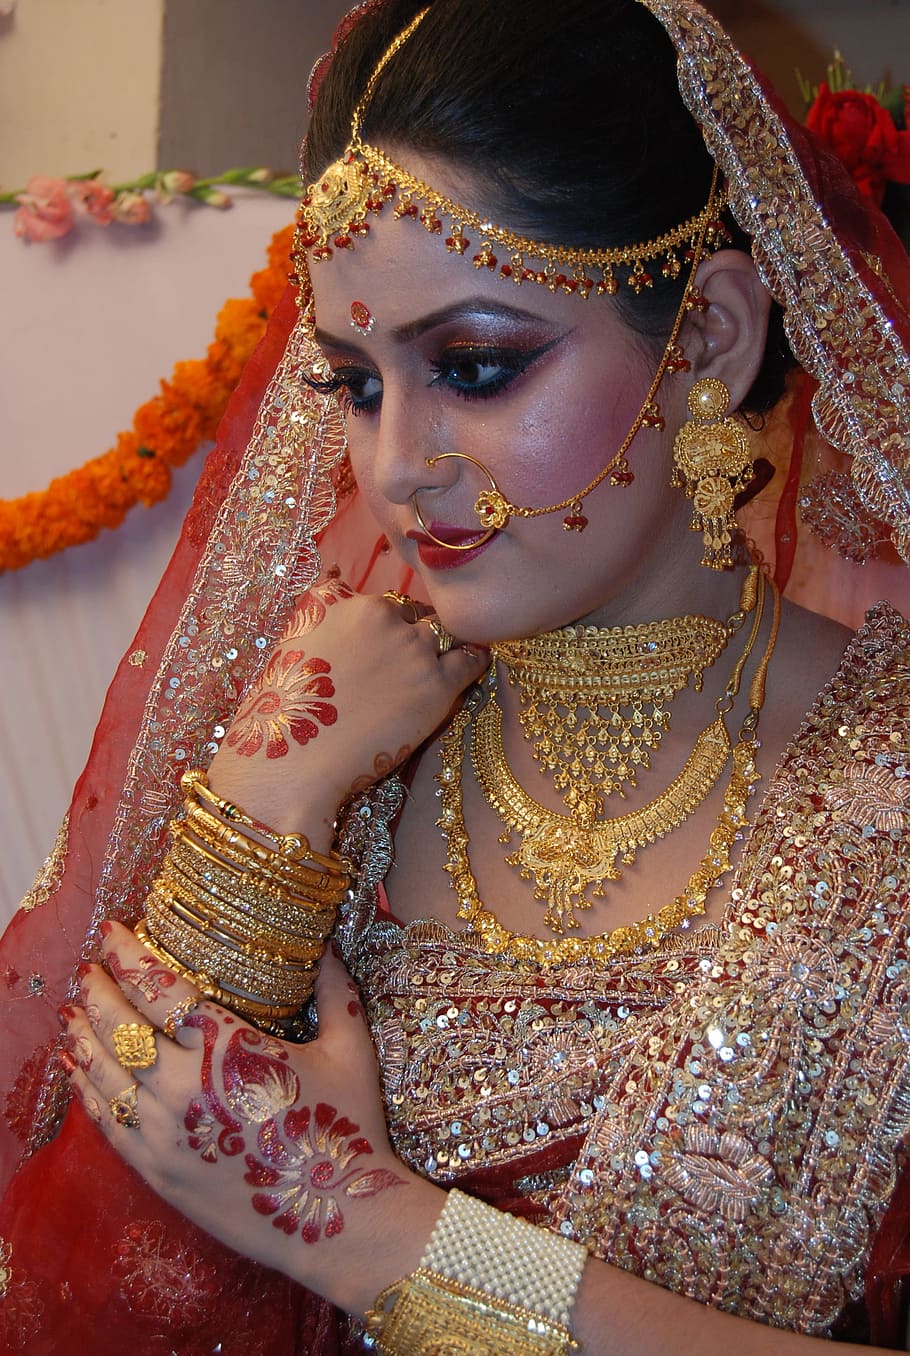 wearing, red, beige, floral, dress, Bride, Wedding, Bangladesh, Cute, Woman